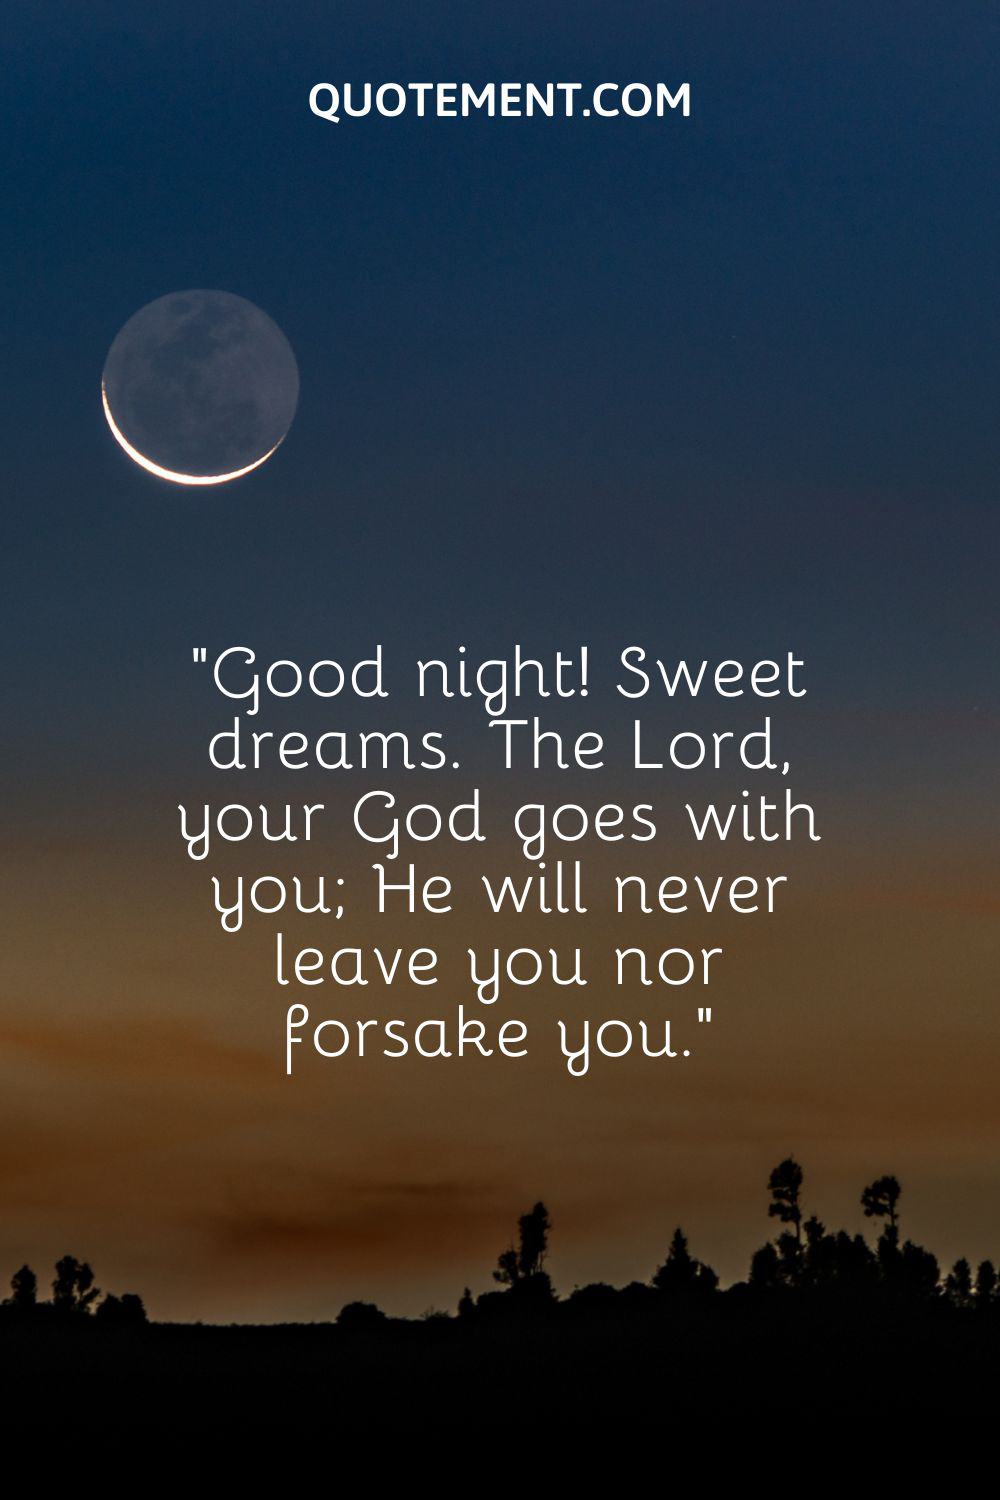 Good night! Sweet dreams.